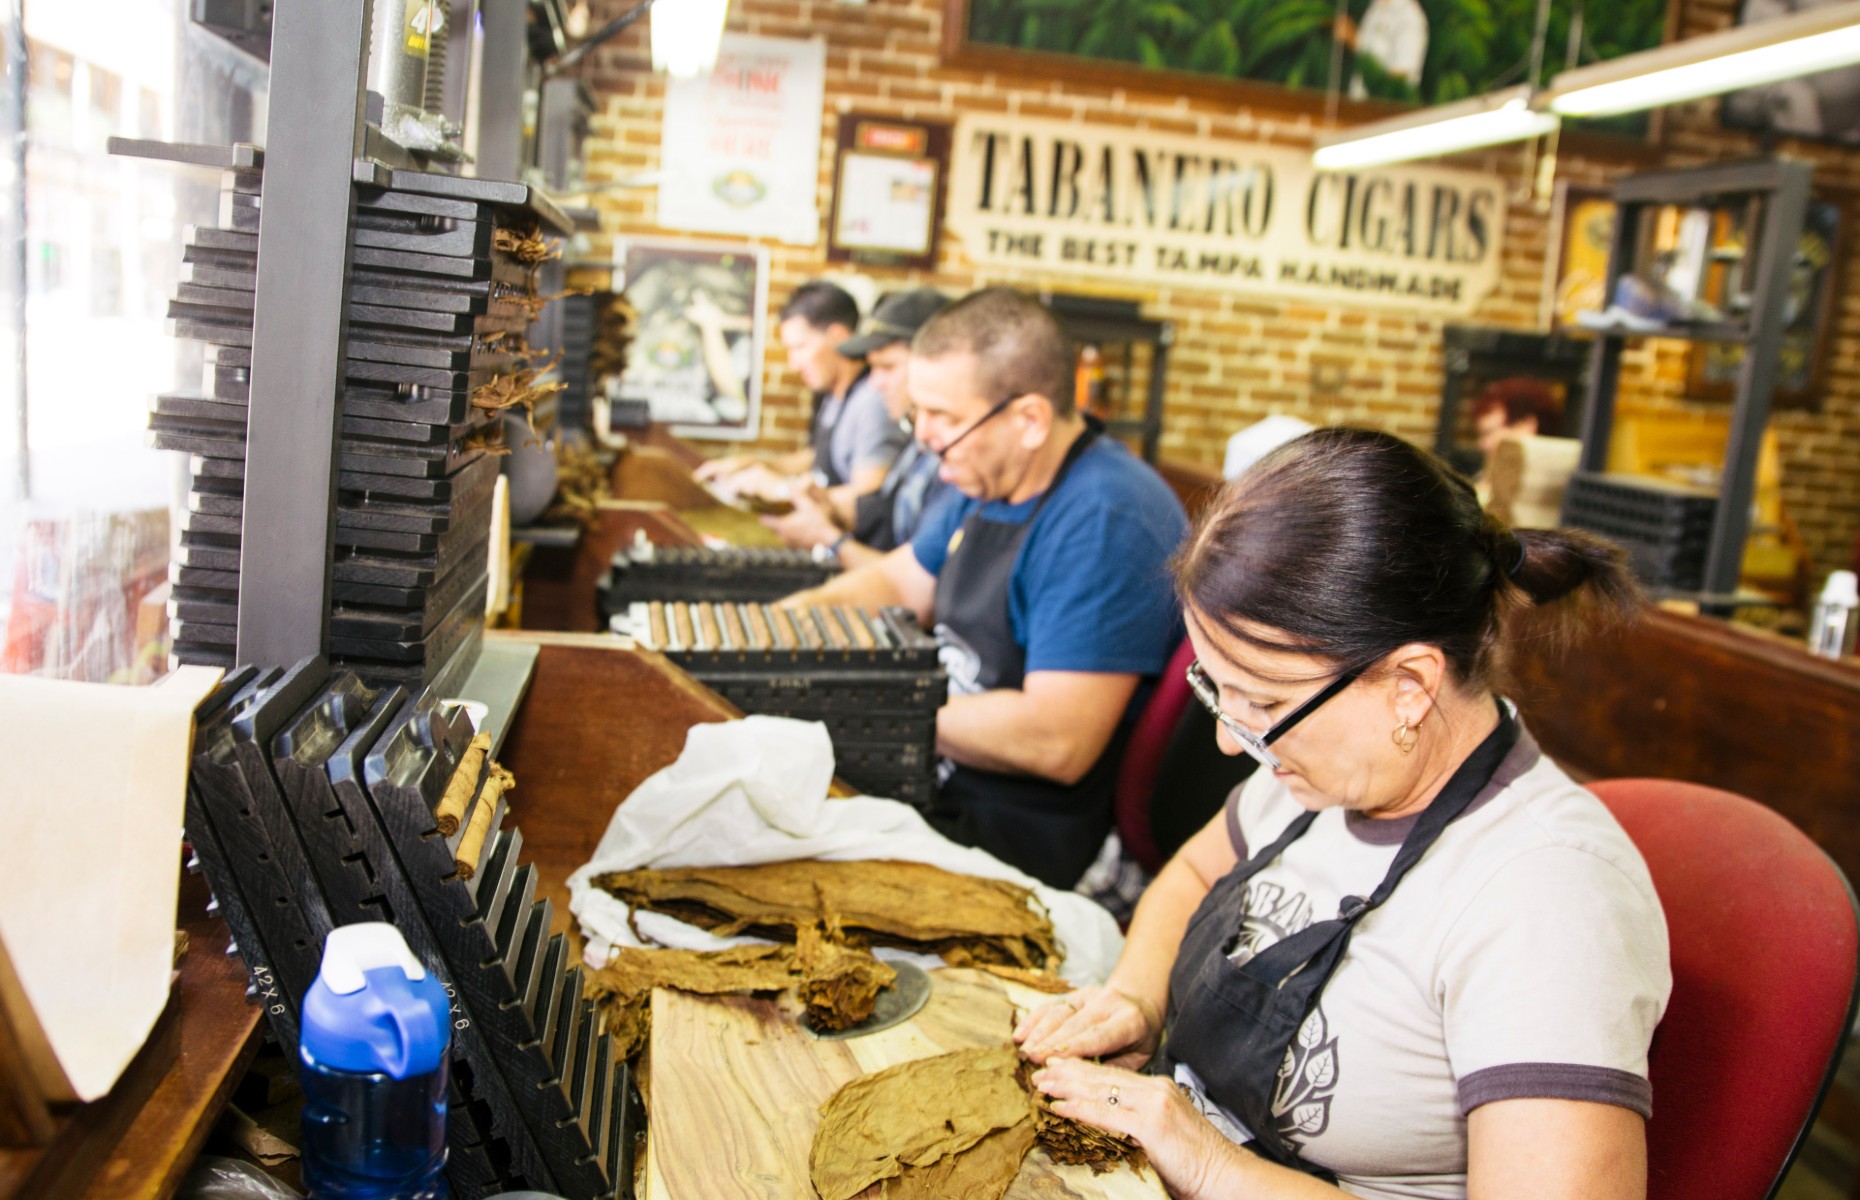 Tabanero Cigar shop in Ybor City (Image: Keir Magoulas | Visit Tampa Bay)